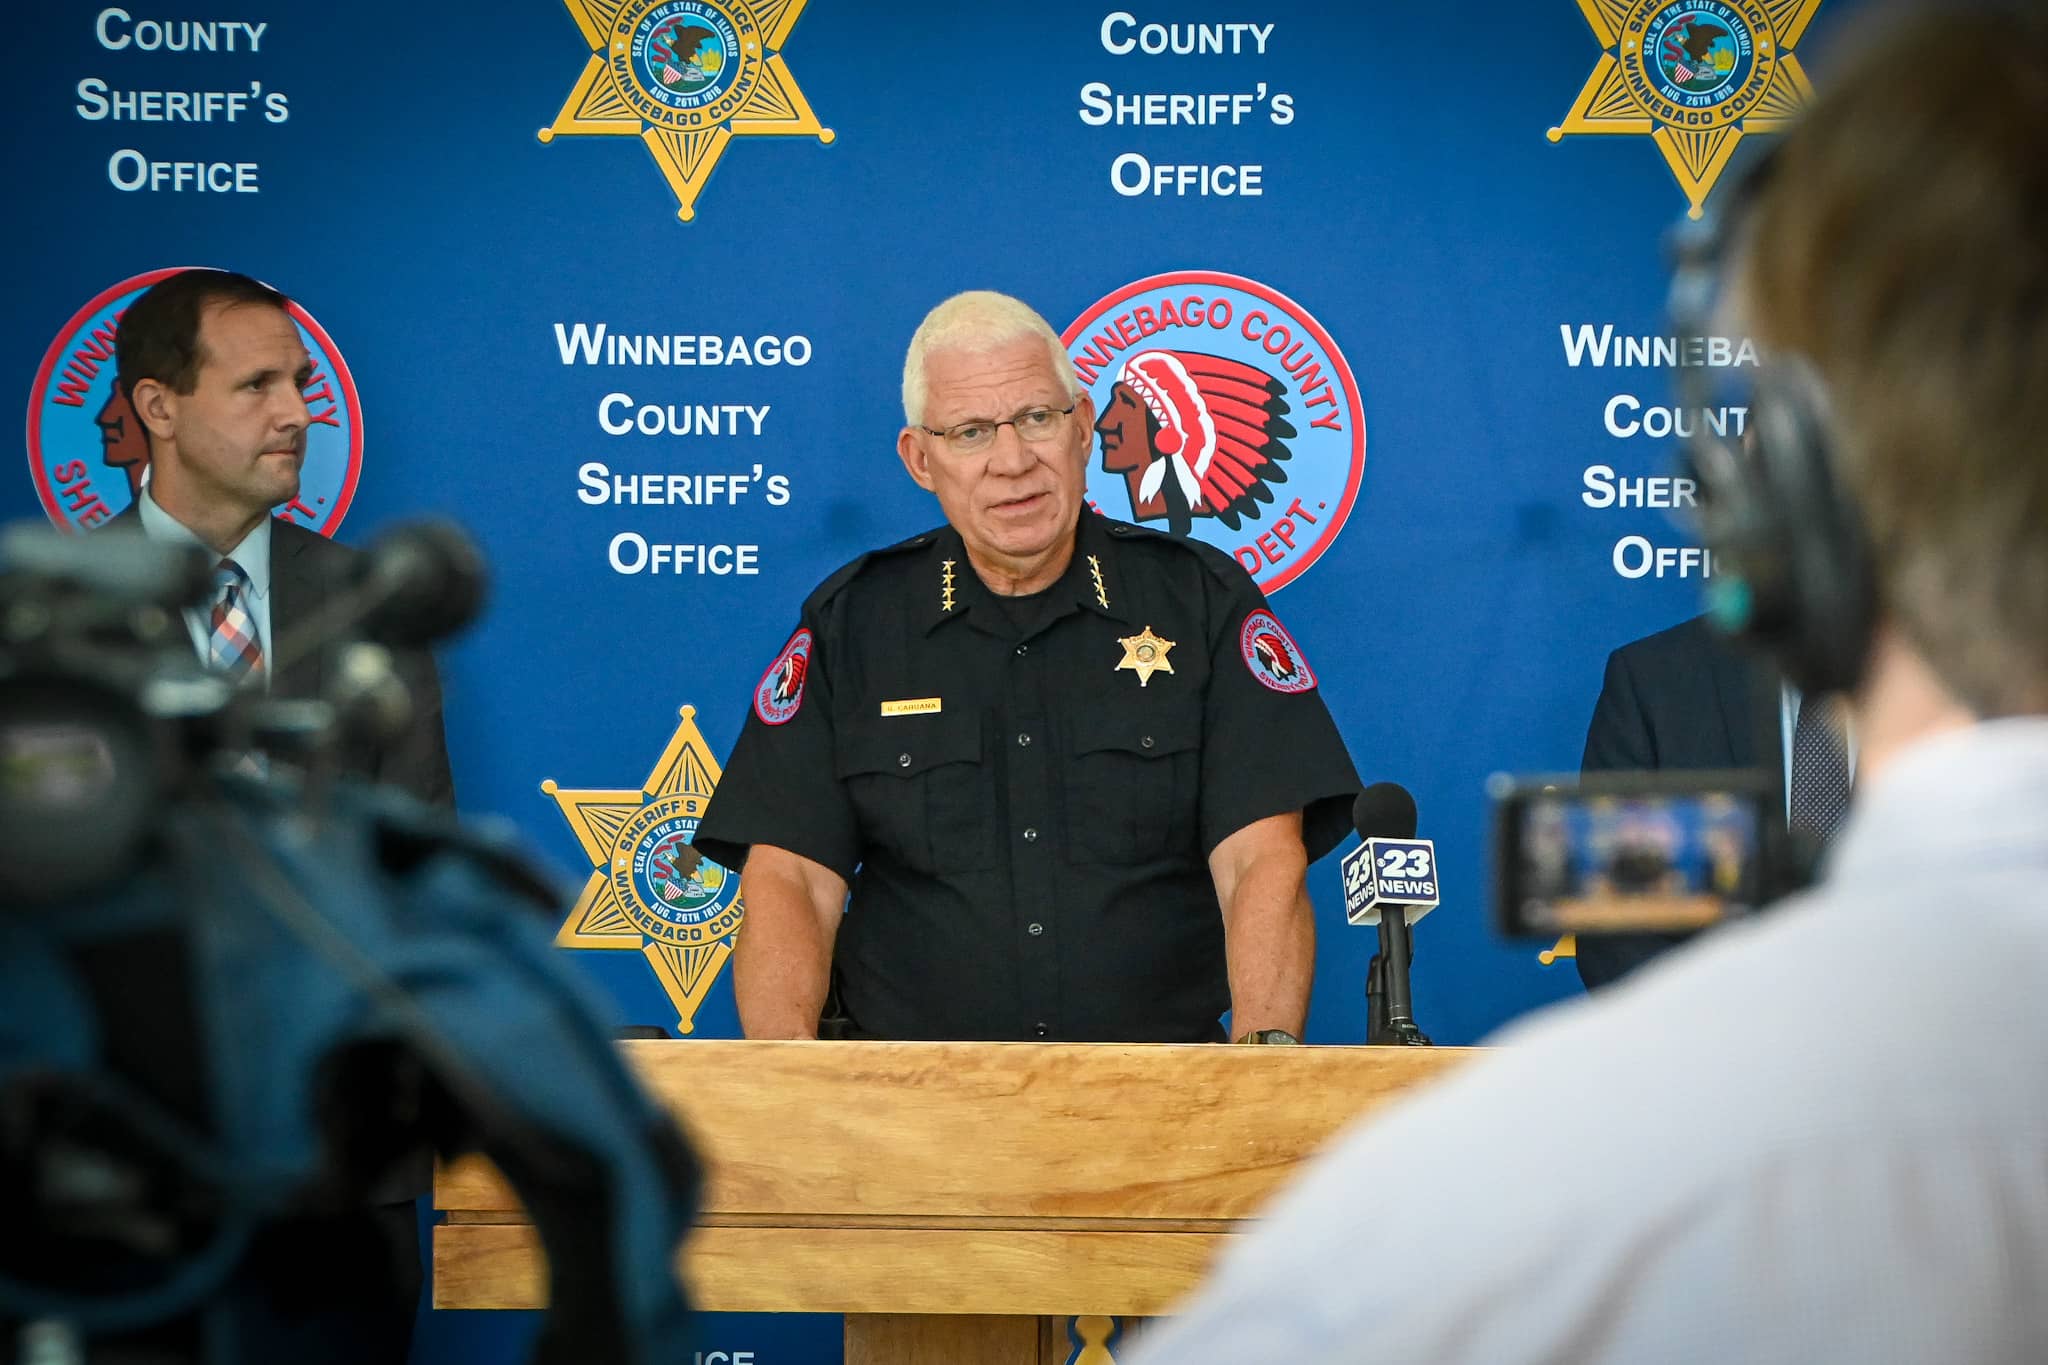 Election 2014: Gary Caruana aims to be Winnebago County sheriff